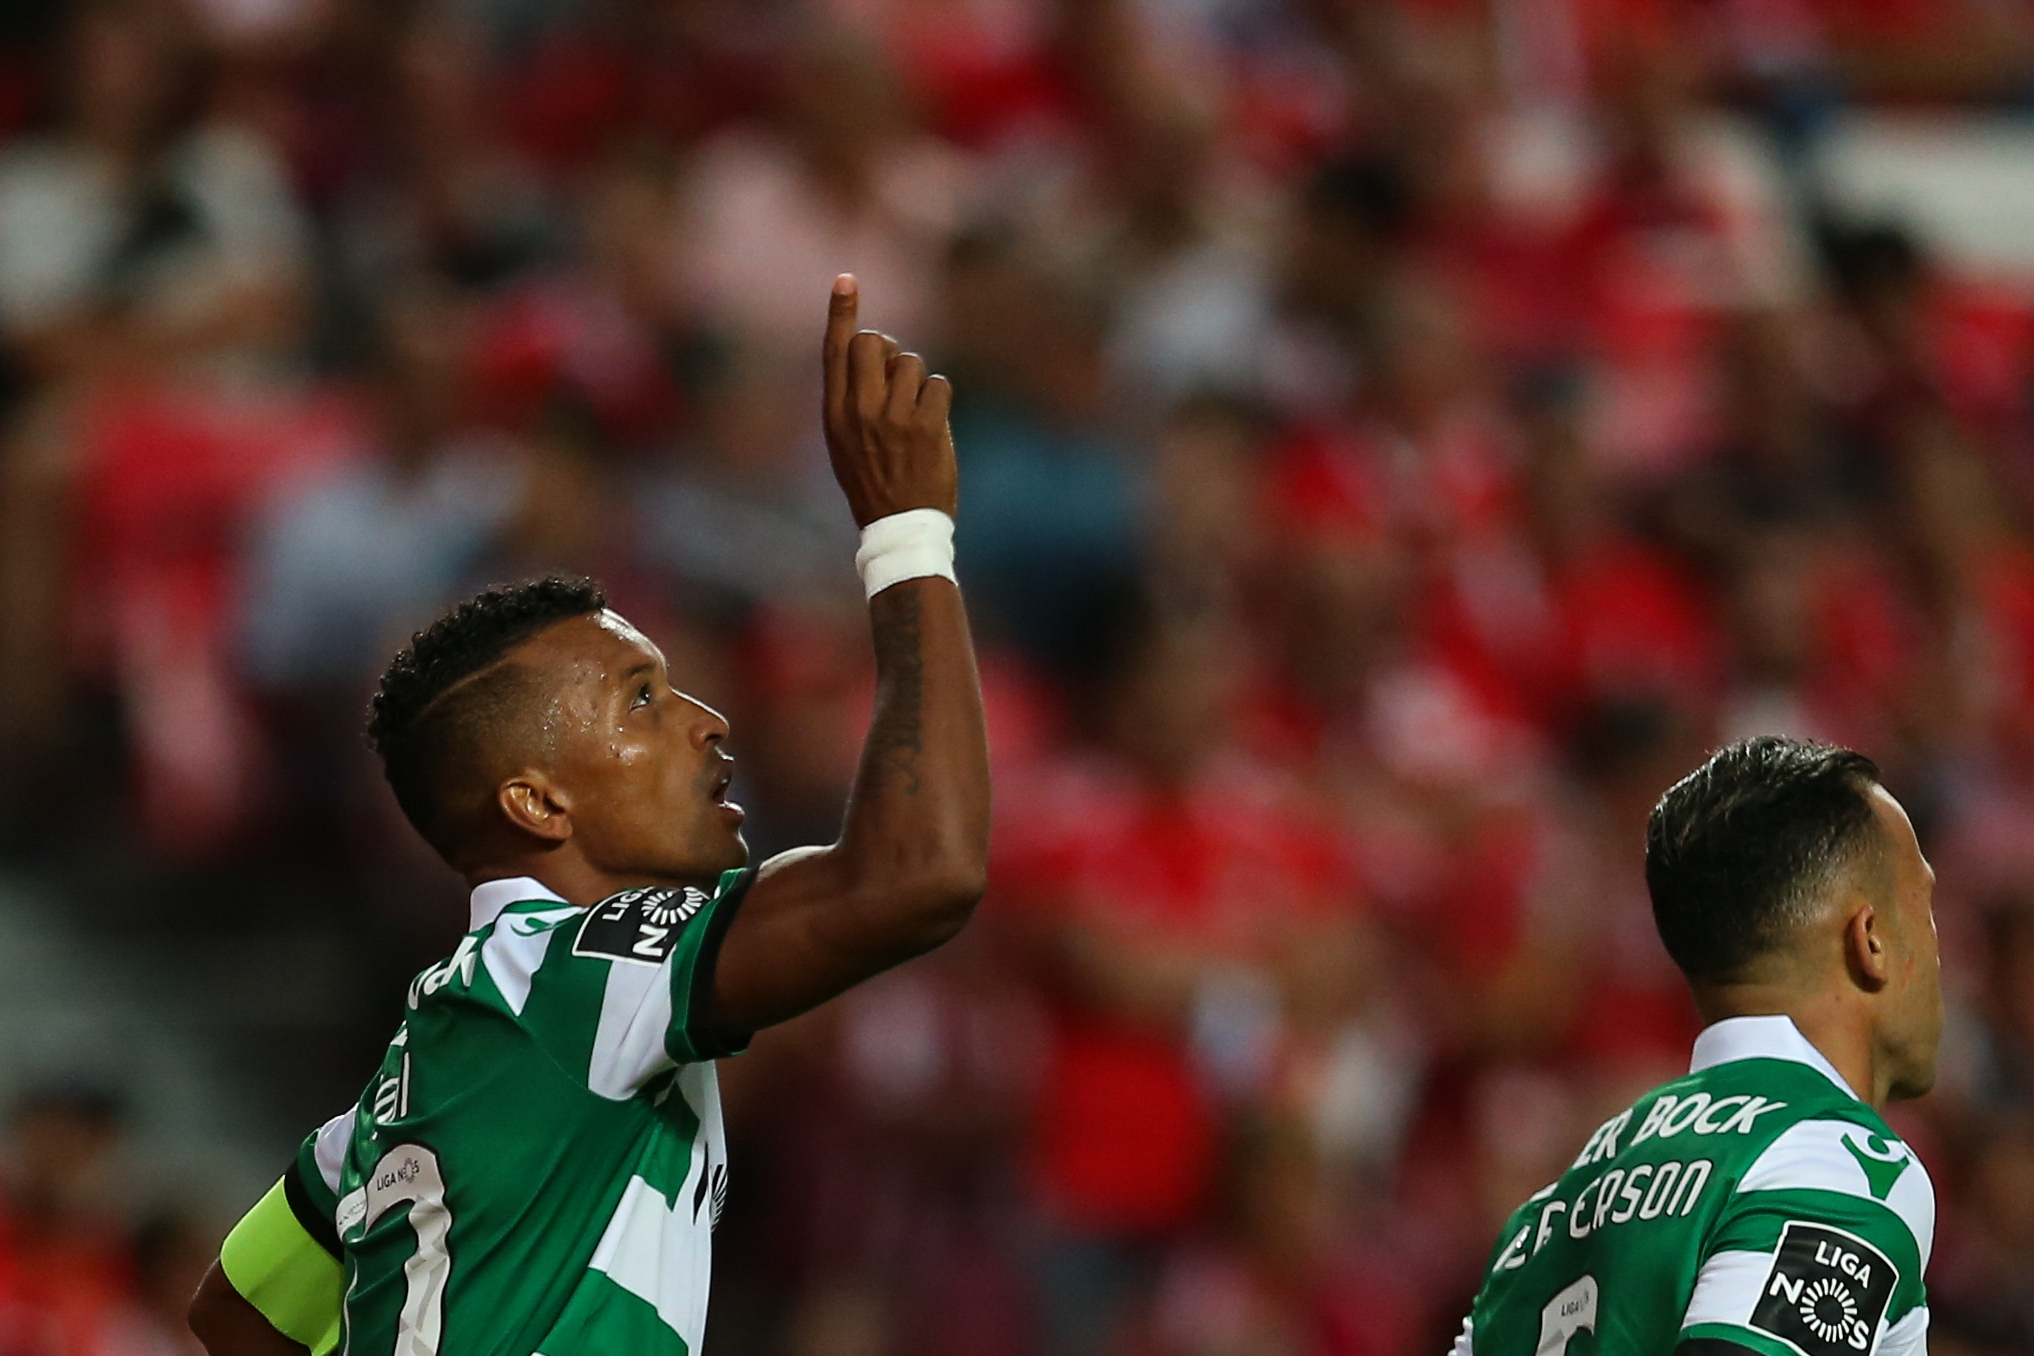 Análise: Benfica procura confirmar domínio no dérbi de Lisboa